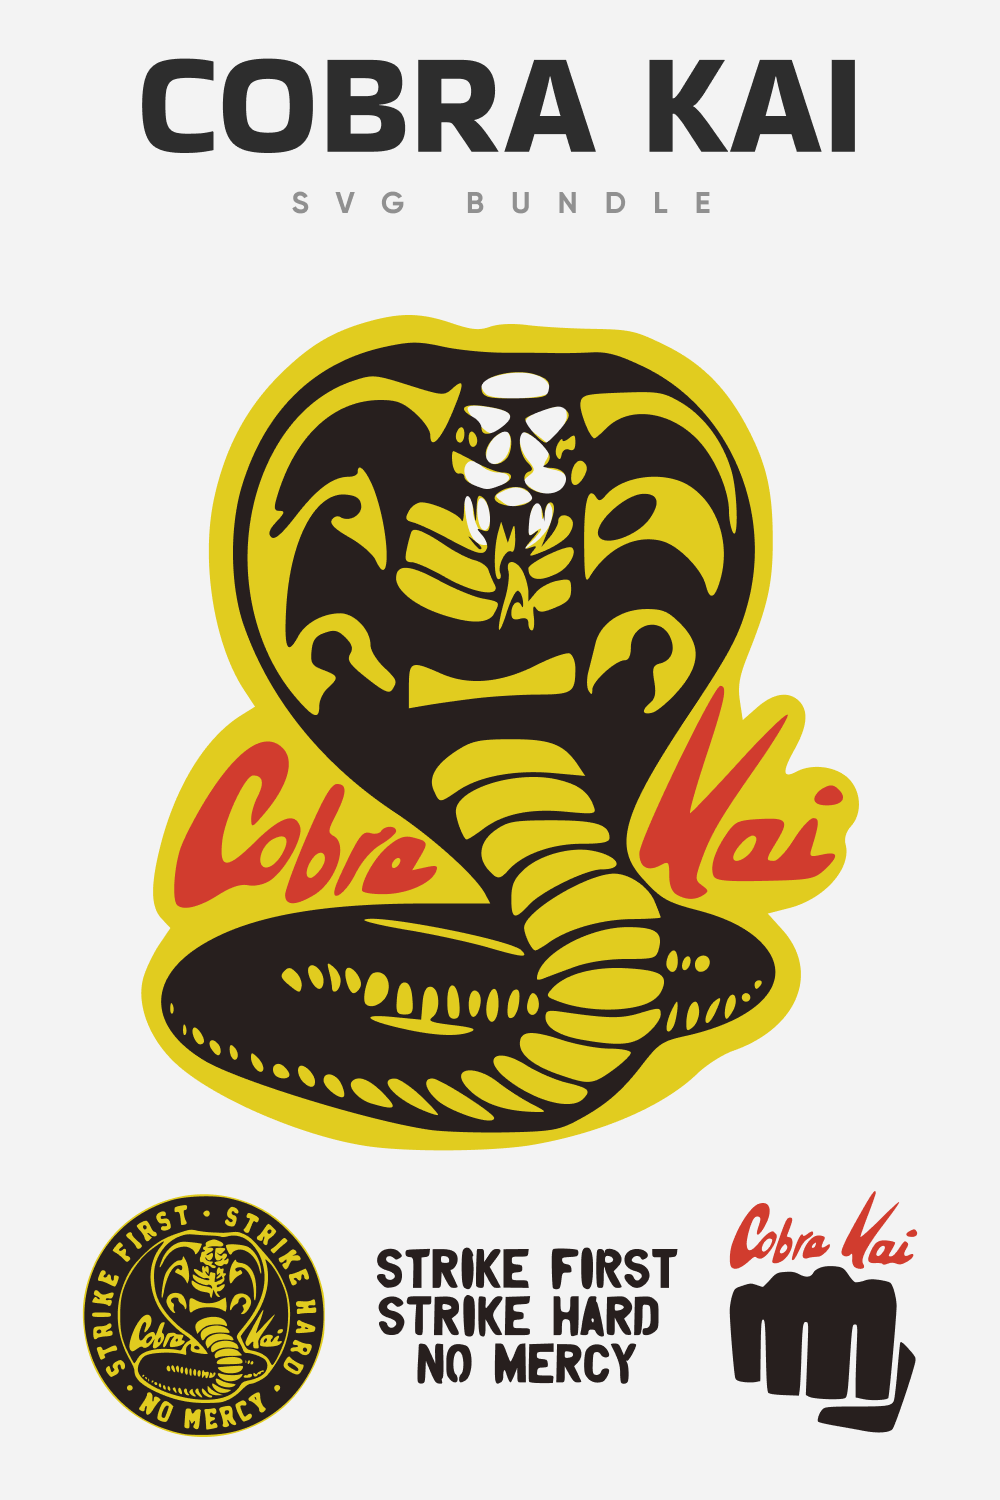 Cobra kai SVG bundle.